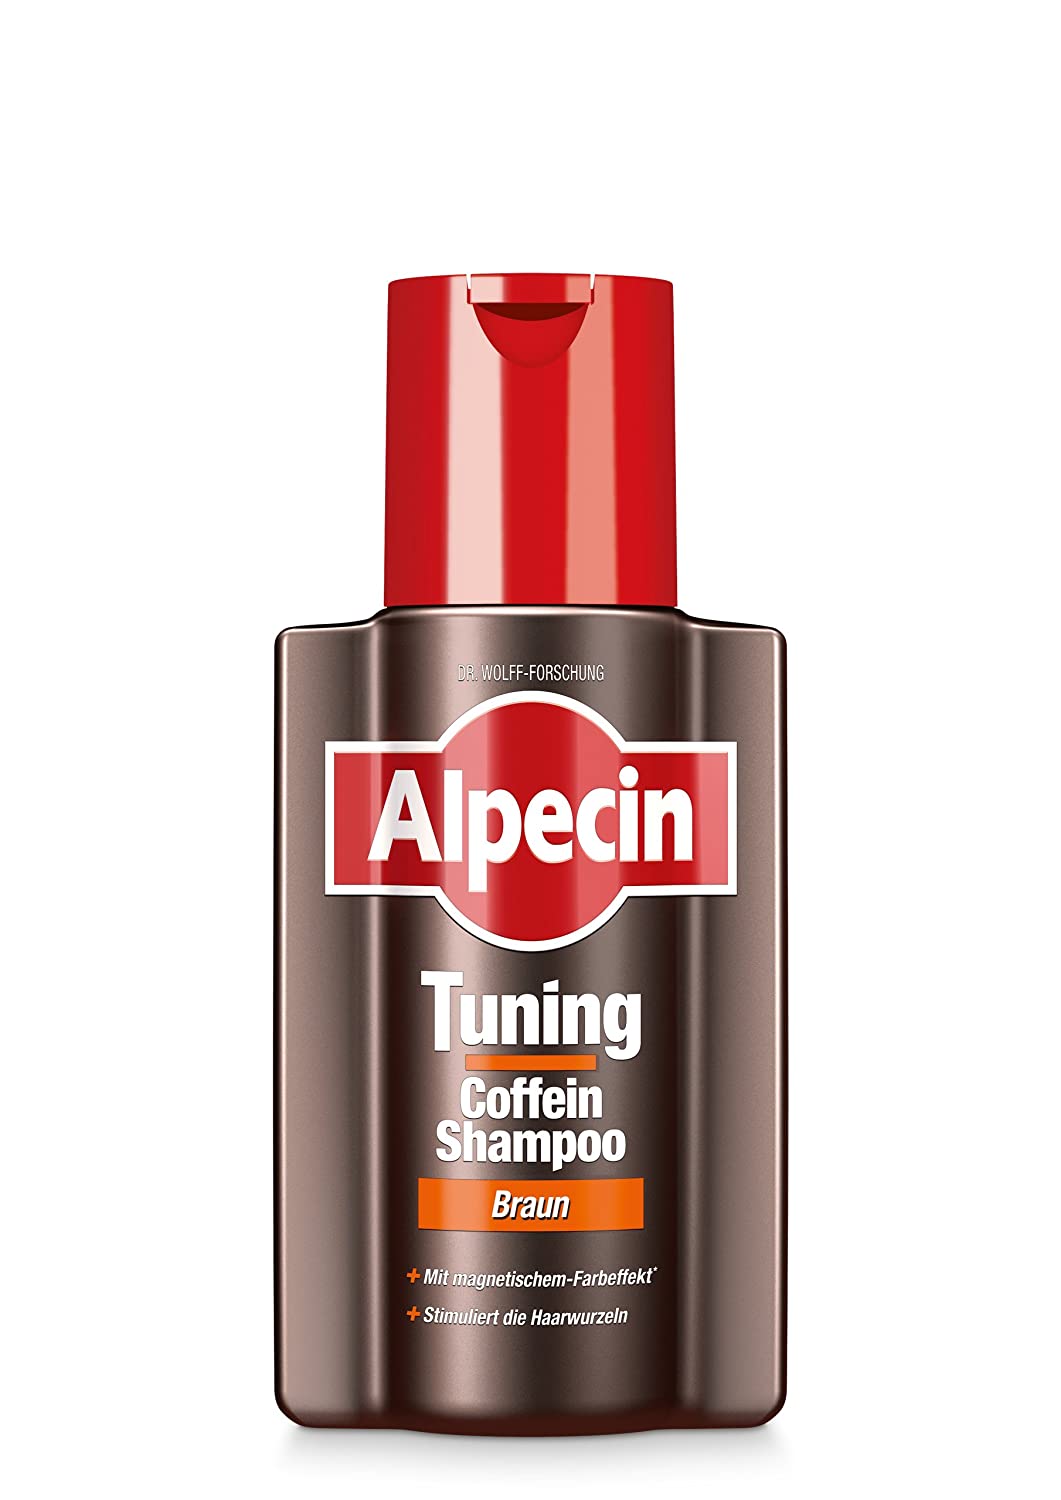 Alpecin Tuning caffeine shampoo, brown, 1 x 200 ml, colour tuning for daily hair washing